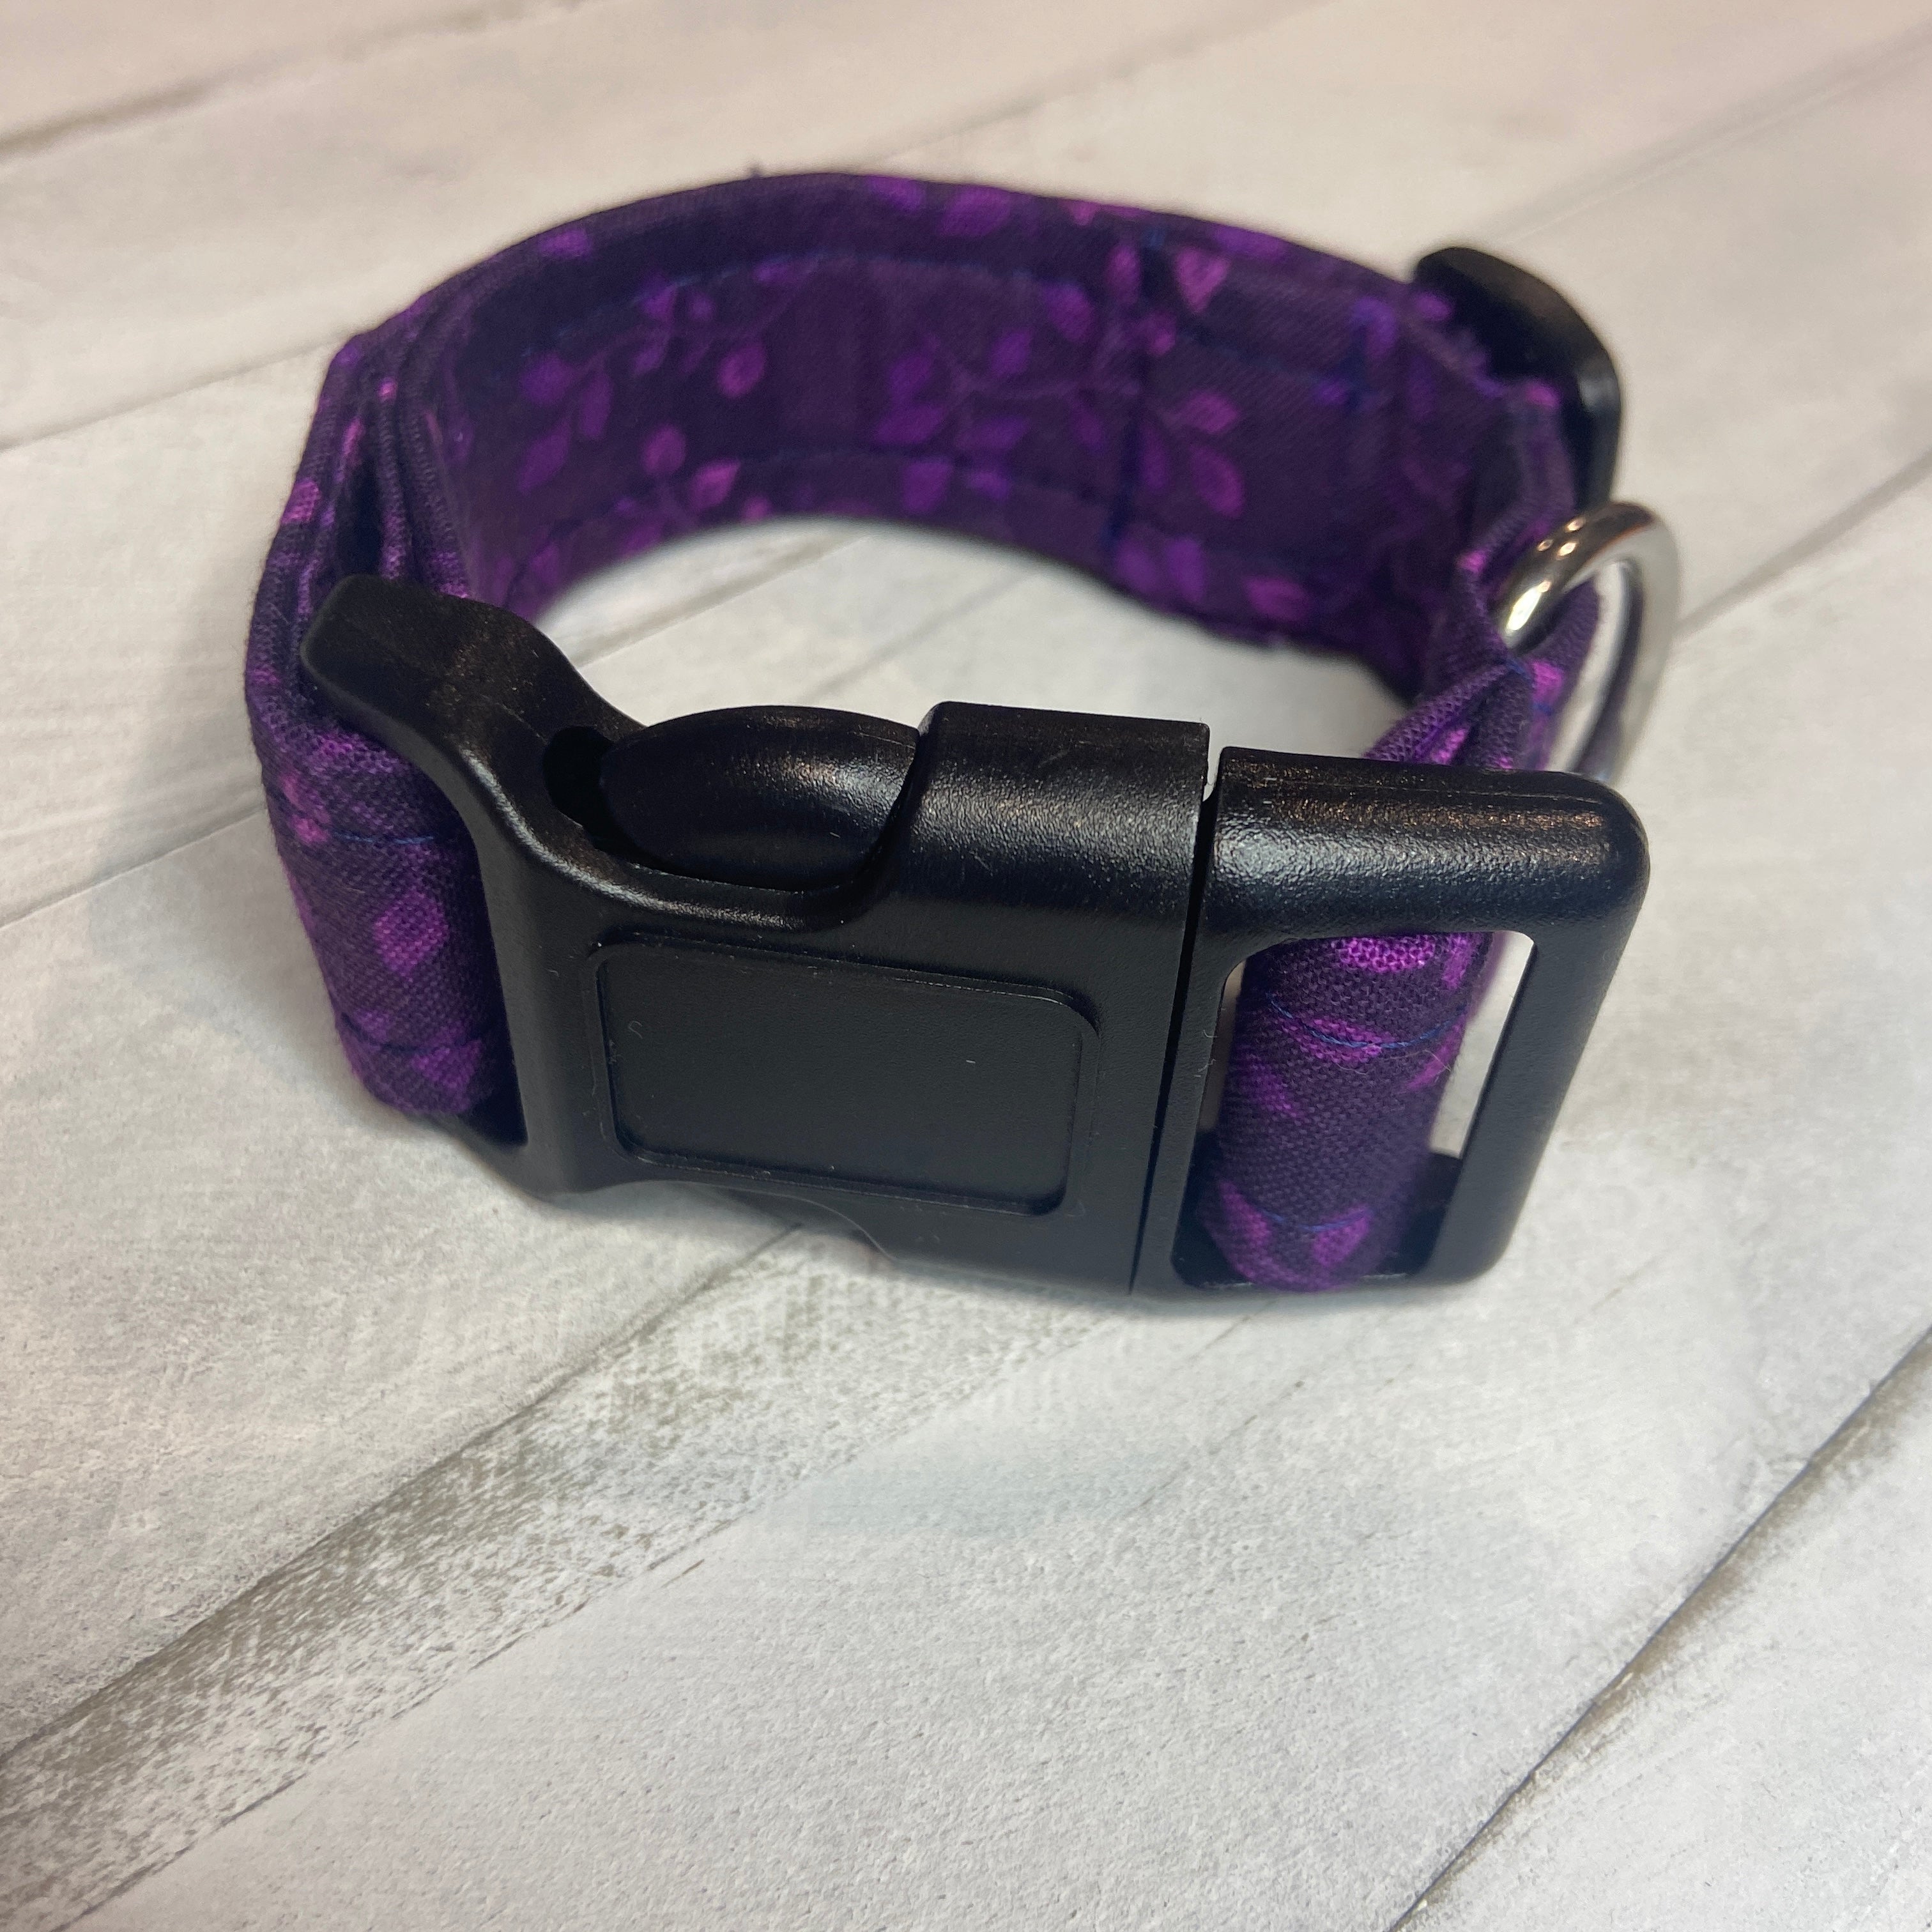 Dog Collar - Purple Floral